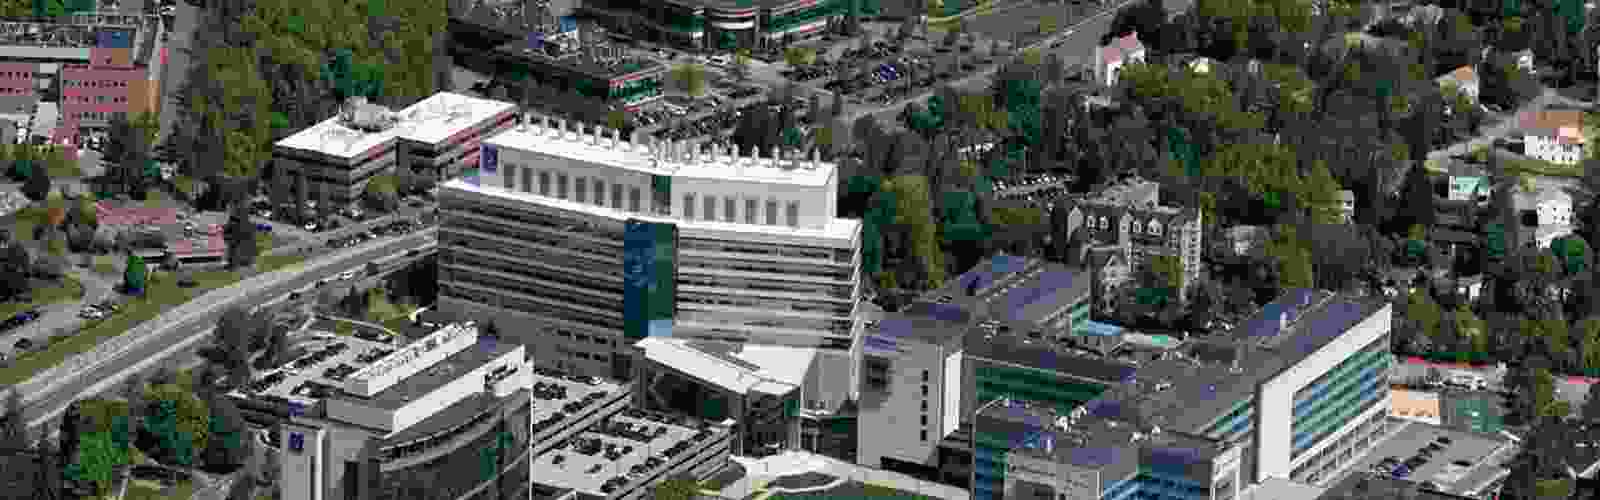 UMass Medical School Campus Aerial View